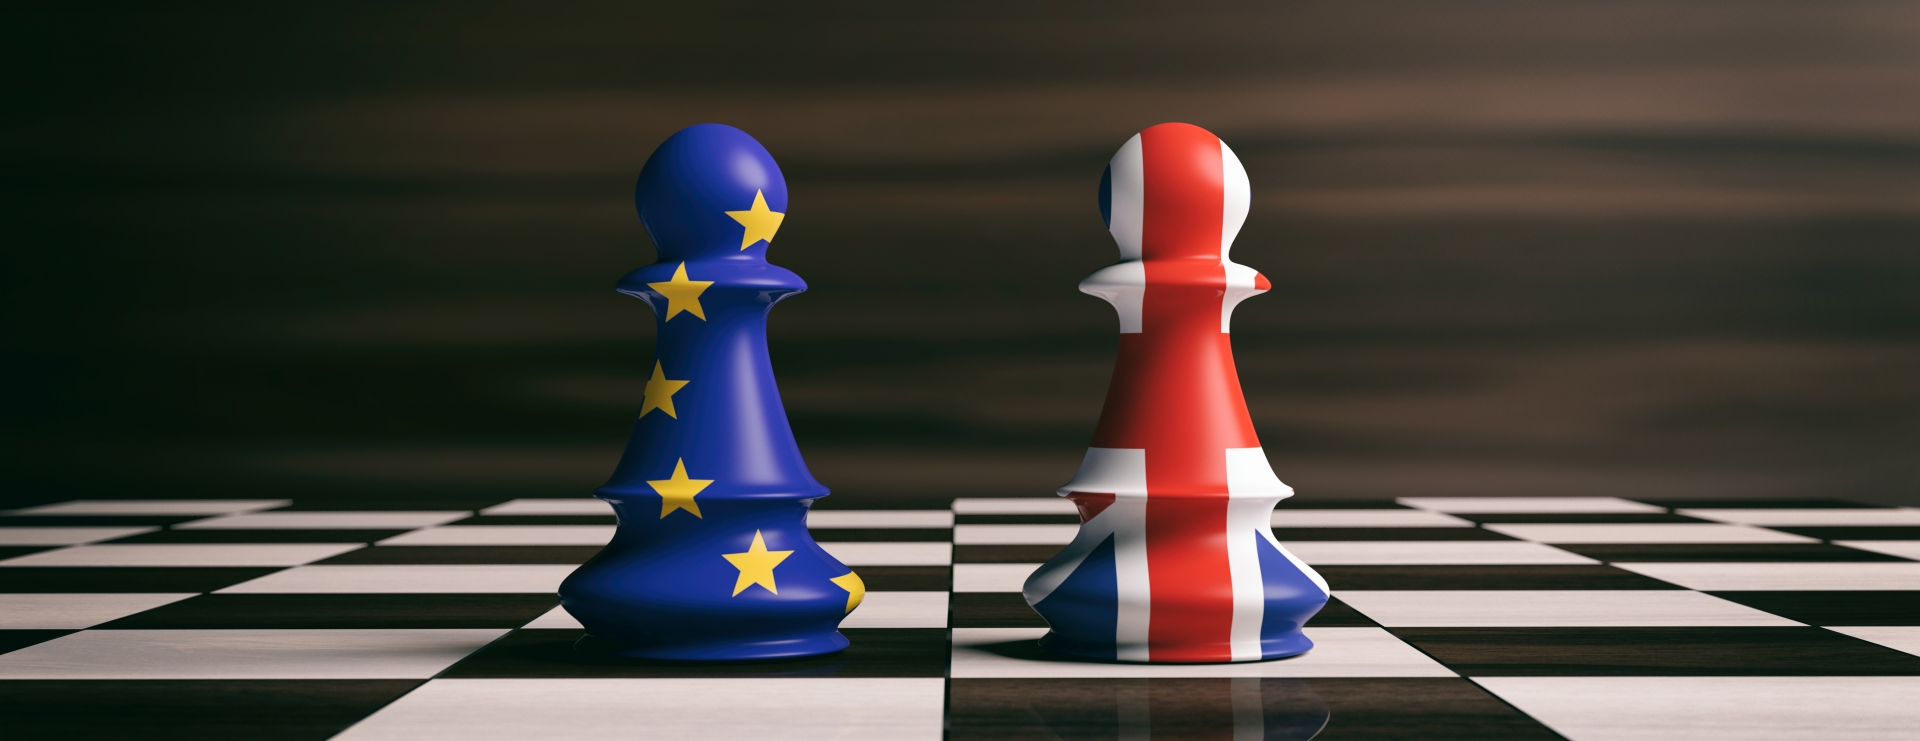 Beyond Brexit: The EU’s Military Union